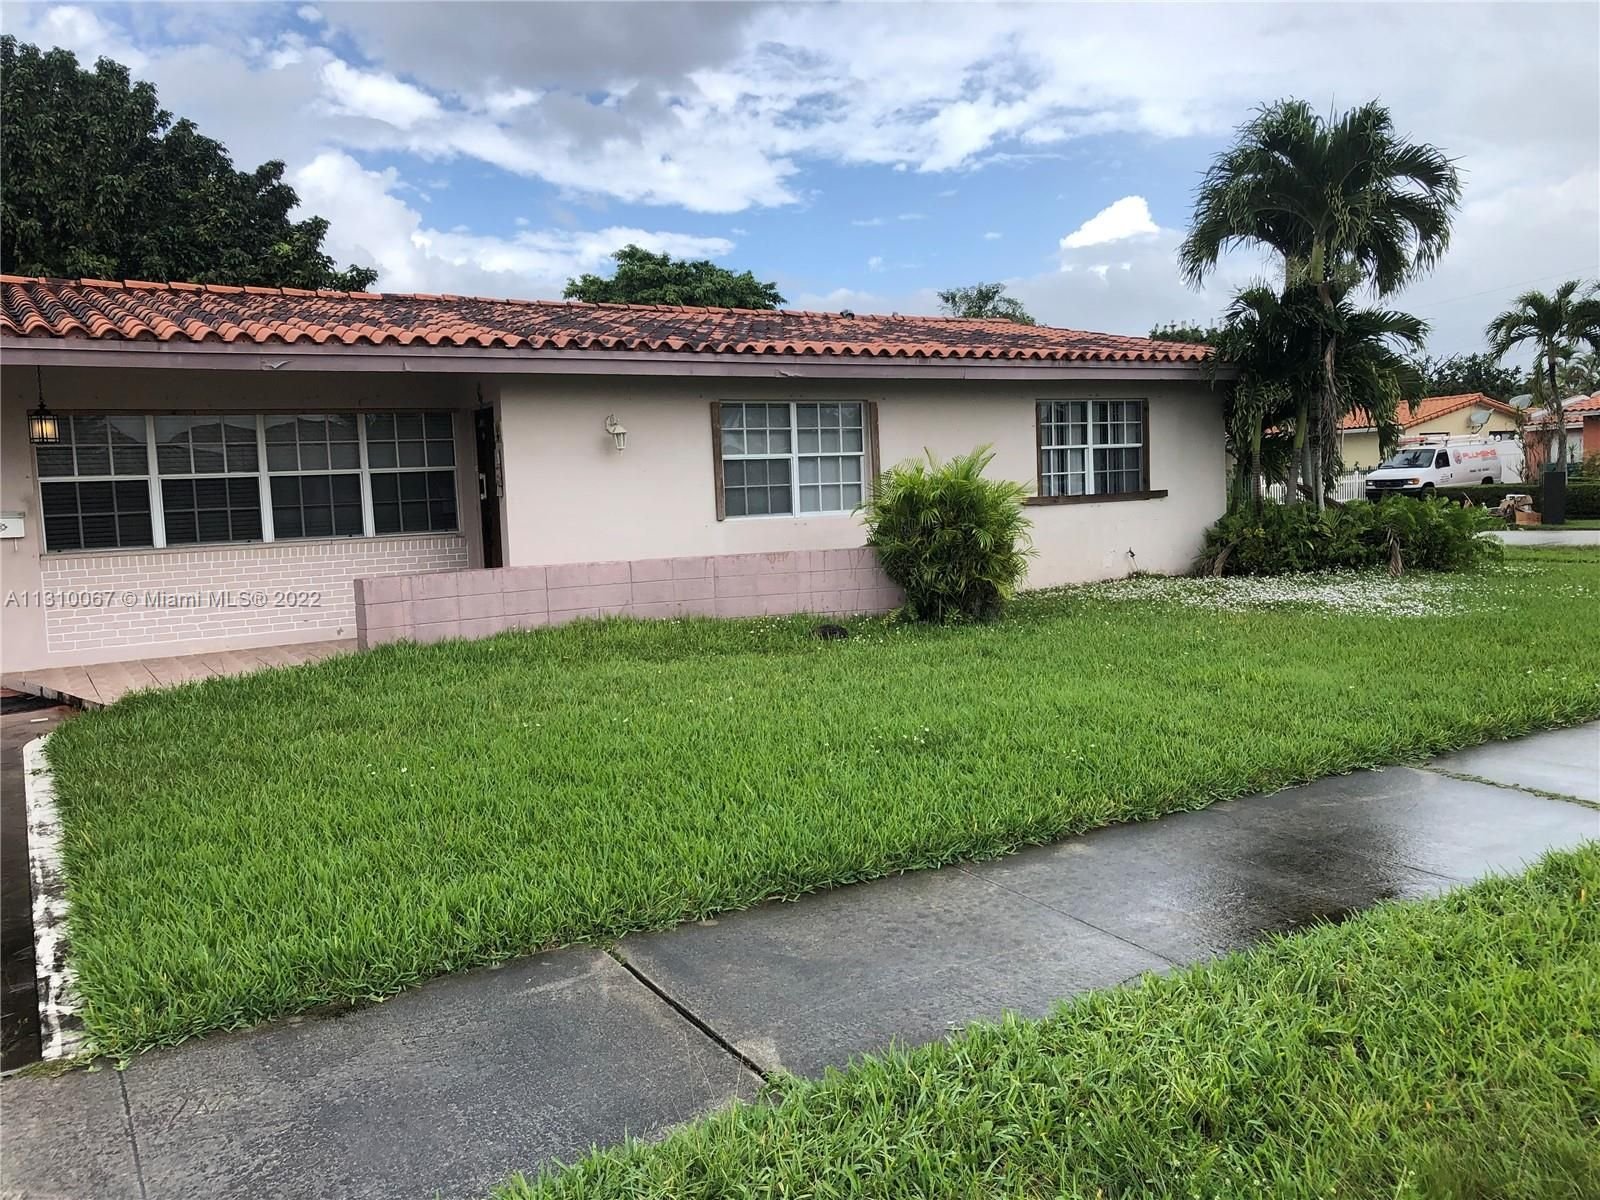 Real estate property located at 9501 47th St, Miami-Dade County, Miami, FL